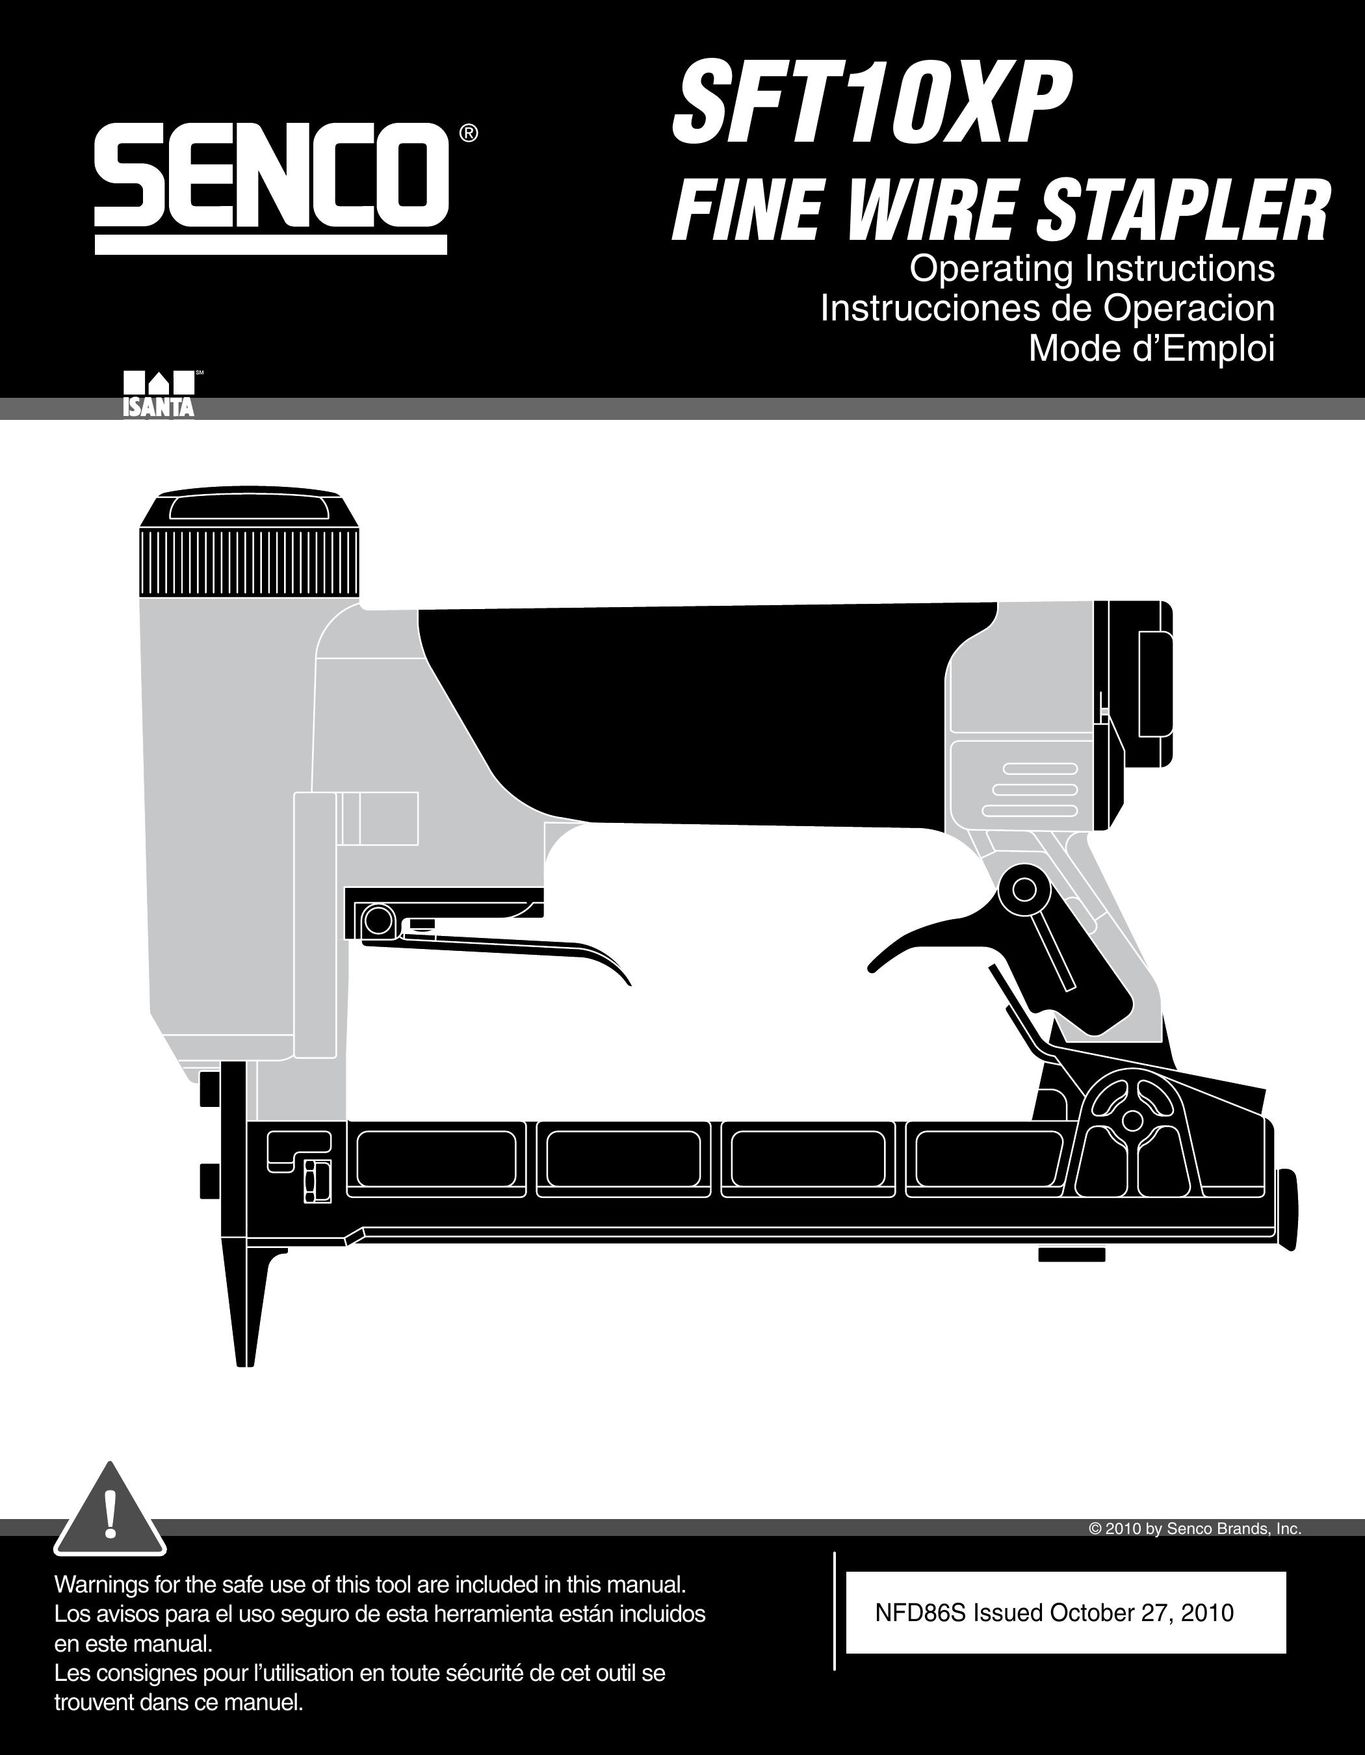 Senco SFT10XP Staple Gun User Manual